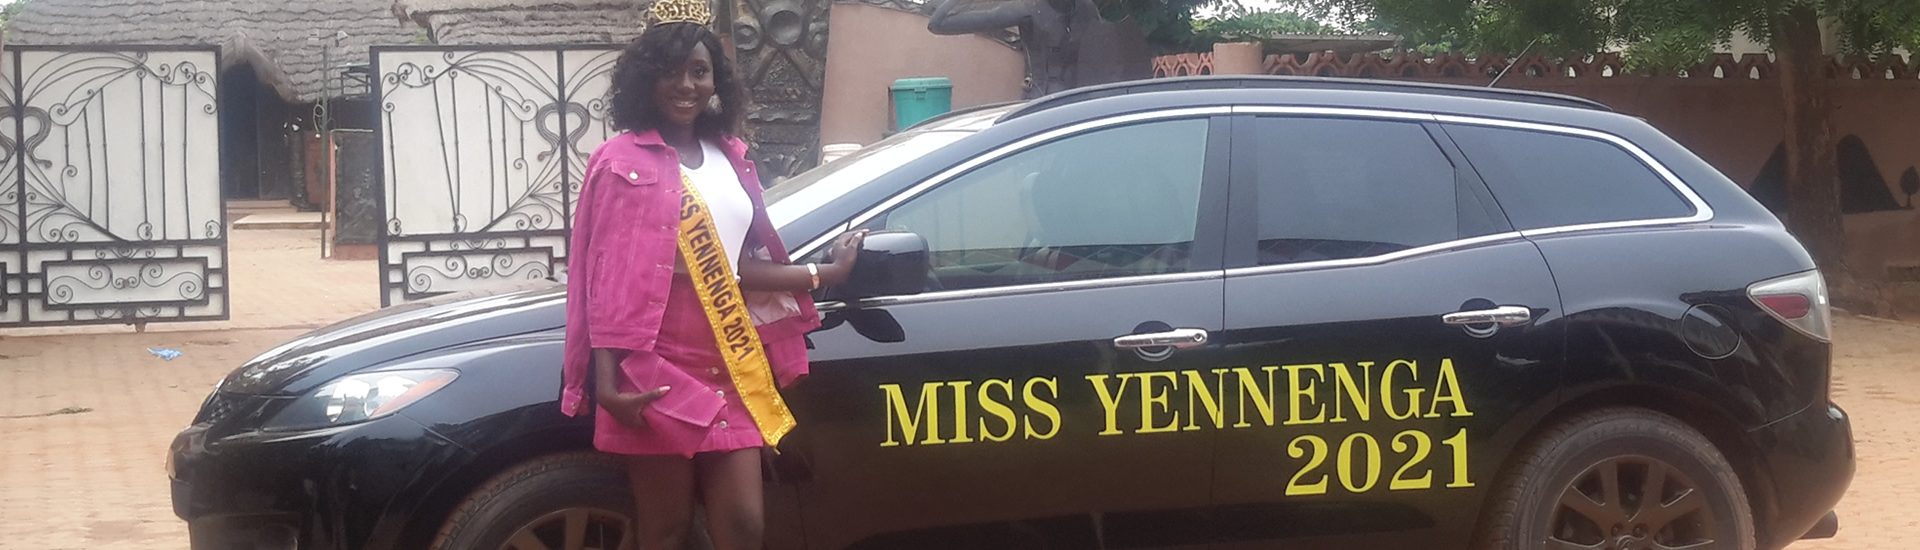 Miss YENNENGA :  Mission accomplie, Natacha TRAORE reçoit sa voiture